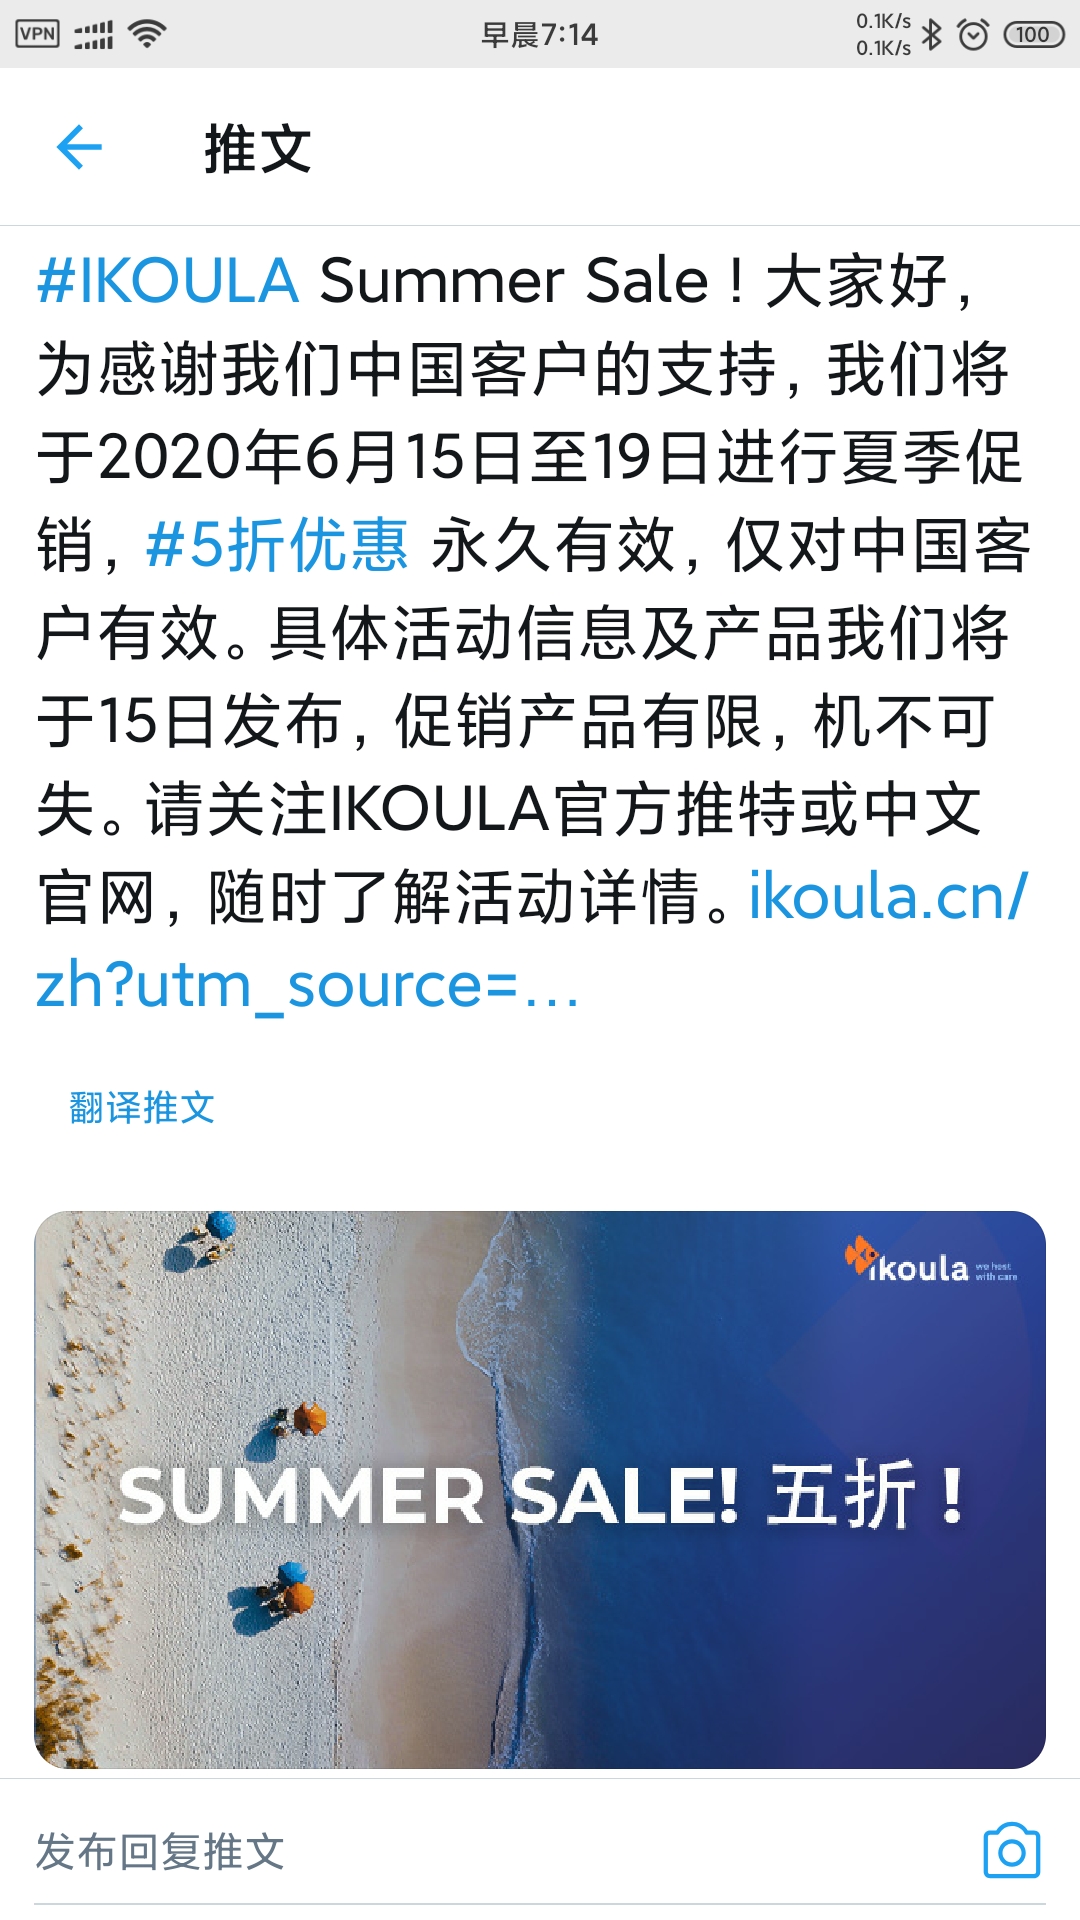 Ikoula 五折促销 只限中国客户